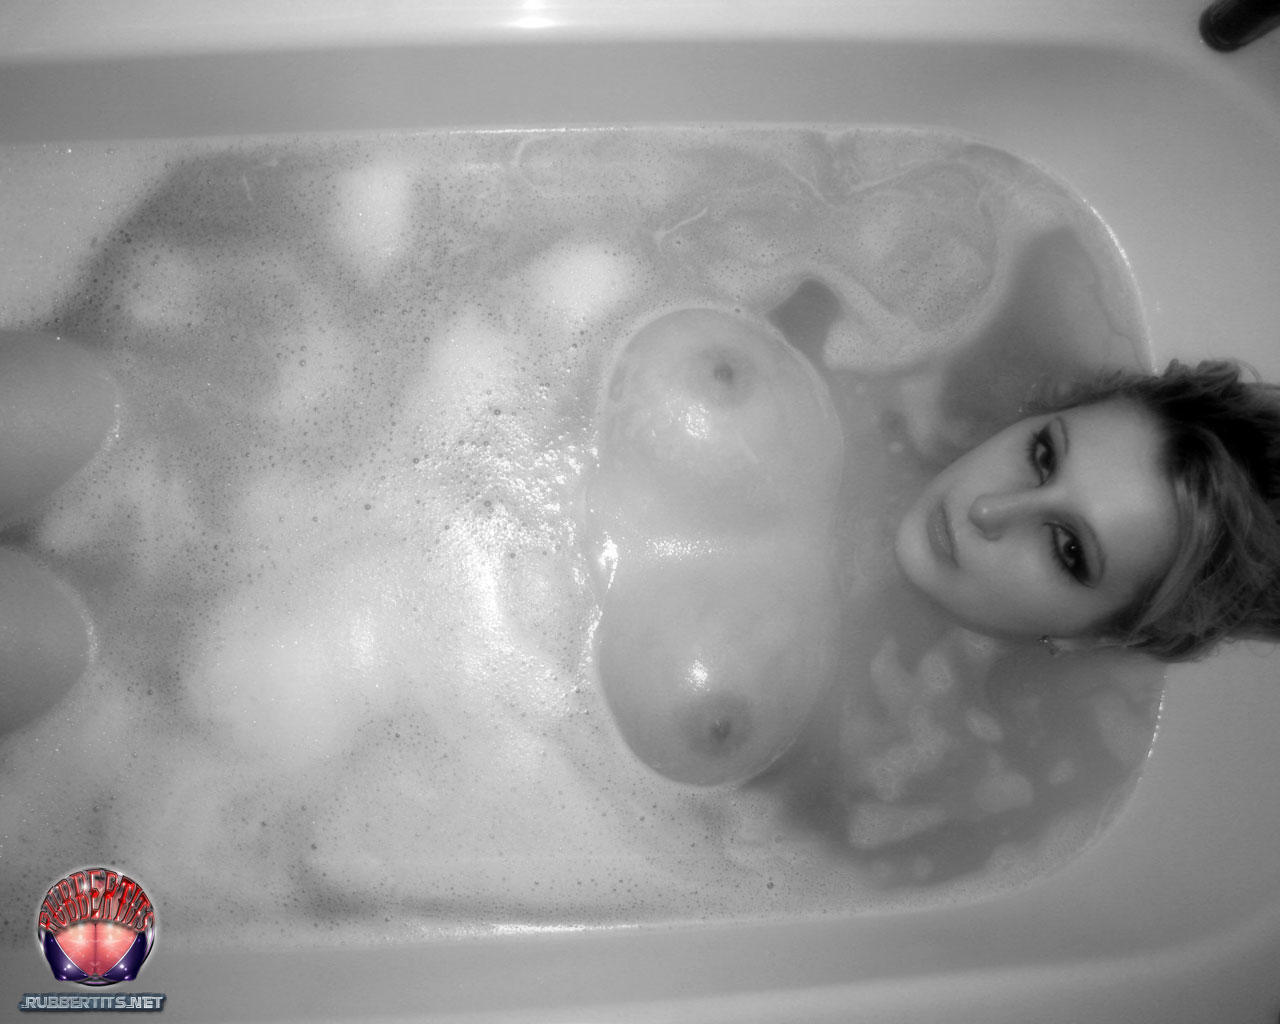 Rubber Tits Bathtime foto pornográfica #426805766 | Rubber Tits Pics, Bath, pornografia móvel